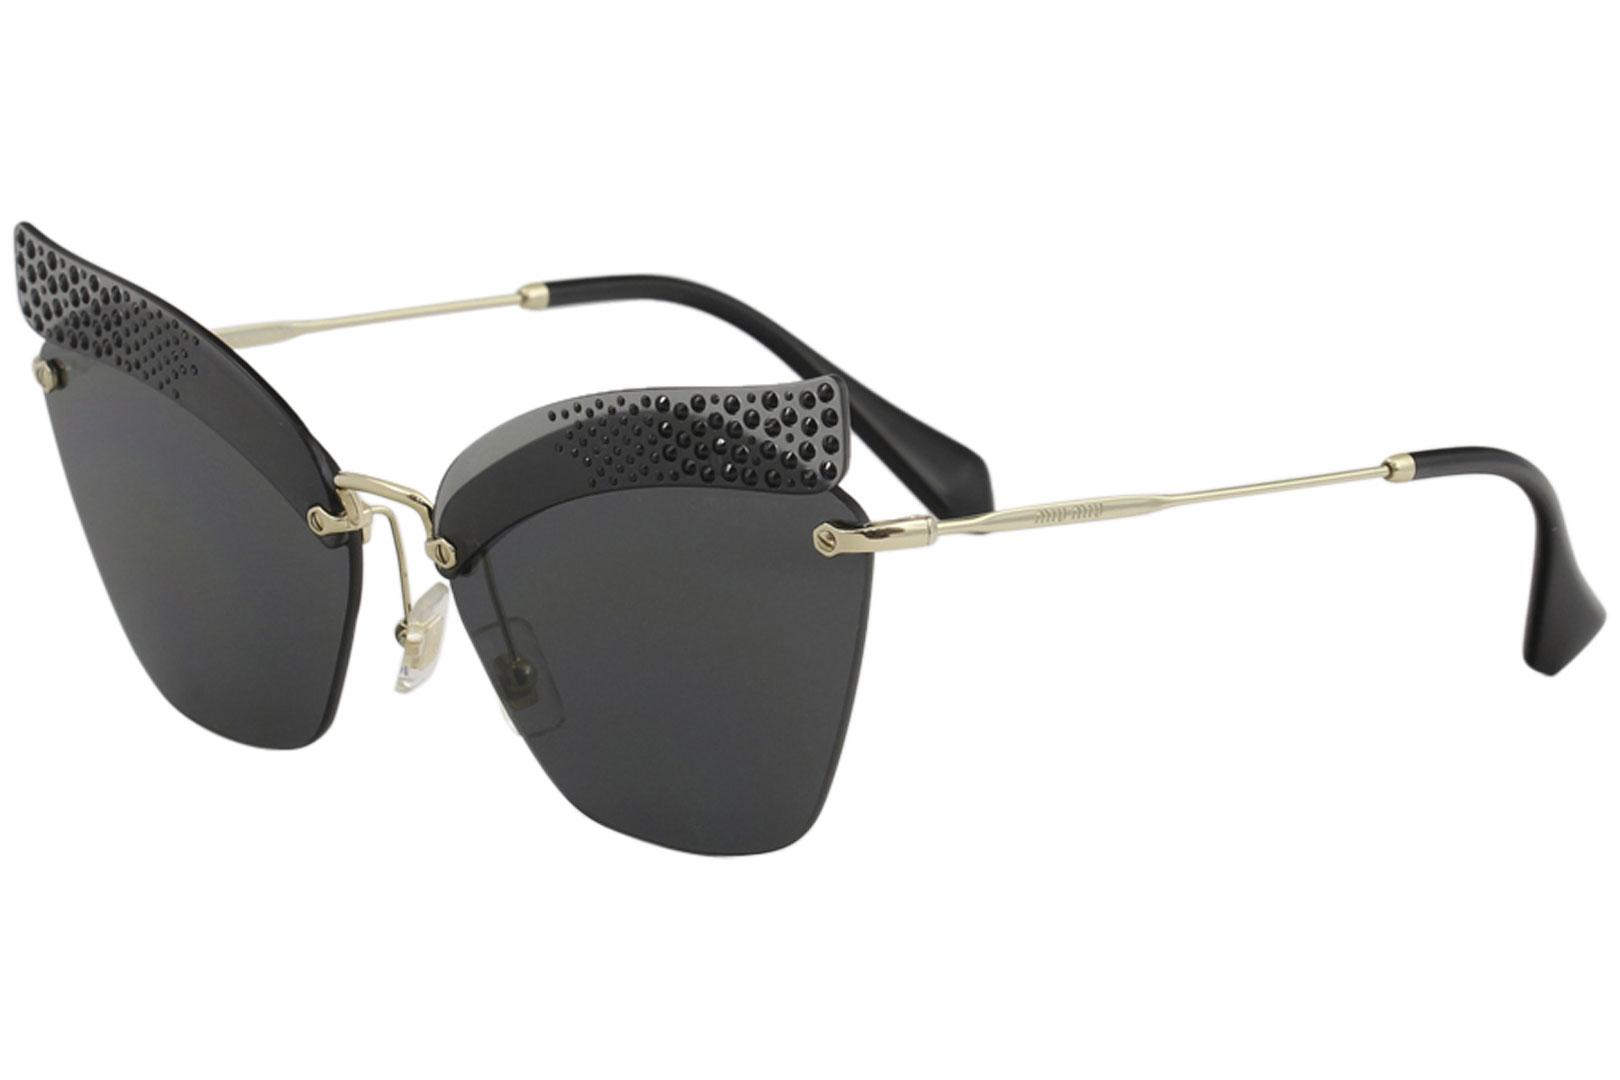 Miu Miu Women's SMU56T SMU/56T Fashion Cat Eye Sunglasses - Dark Transparent Grey/Grey   XEJ/1A1 - Lens 63 Bridge 16 B 51.3 ED 68.9 Temple 145mm